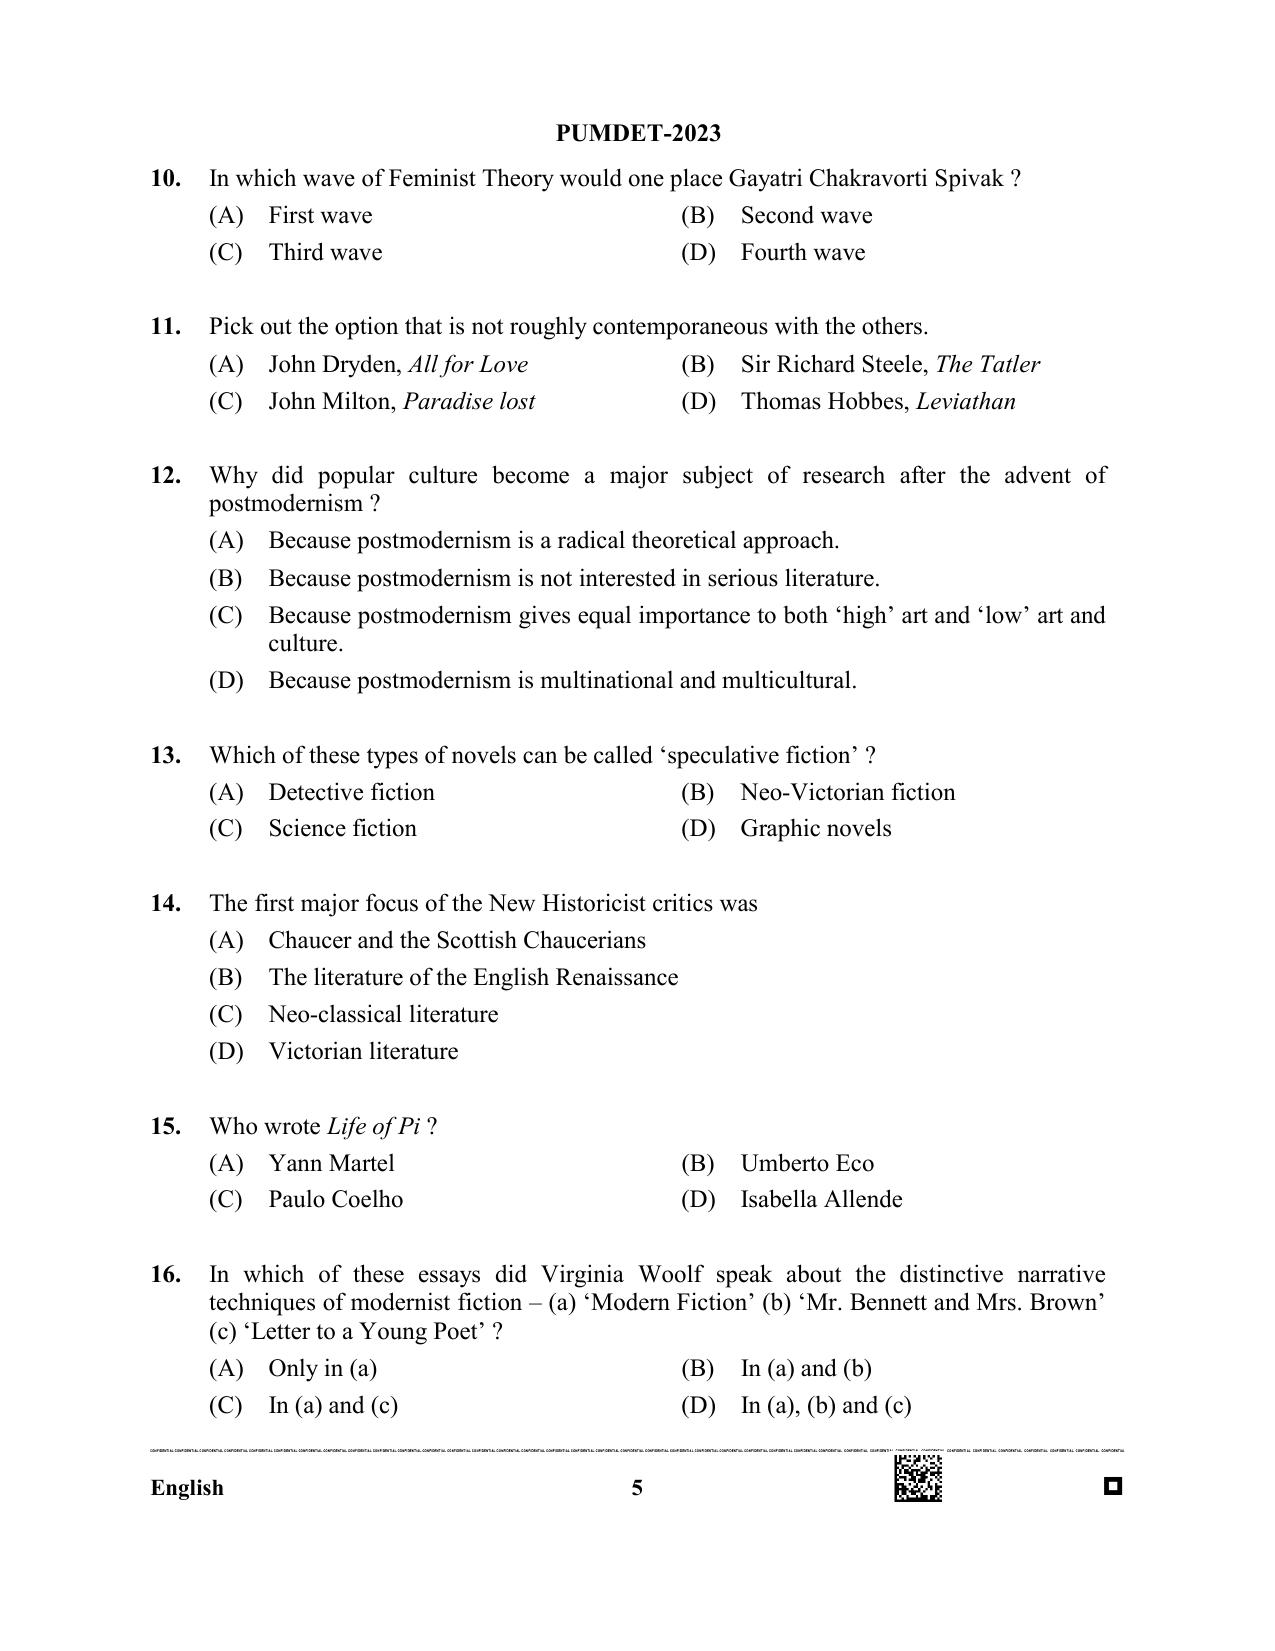 PUBDET 2023 English Question Paper - Page 5